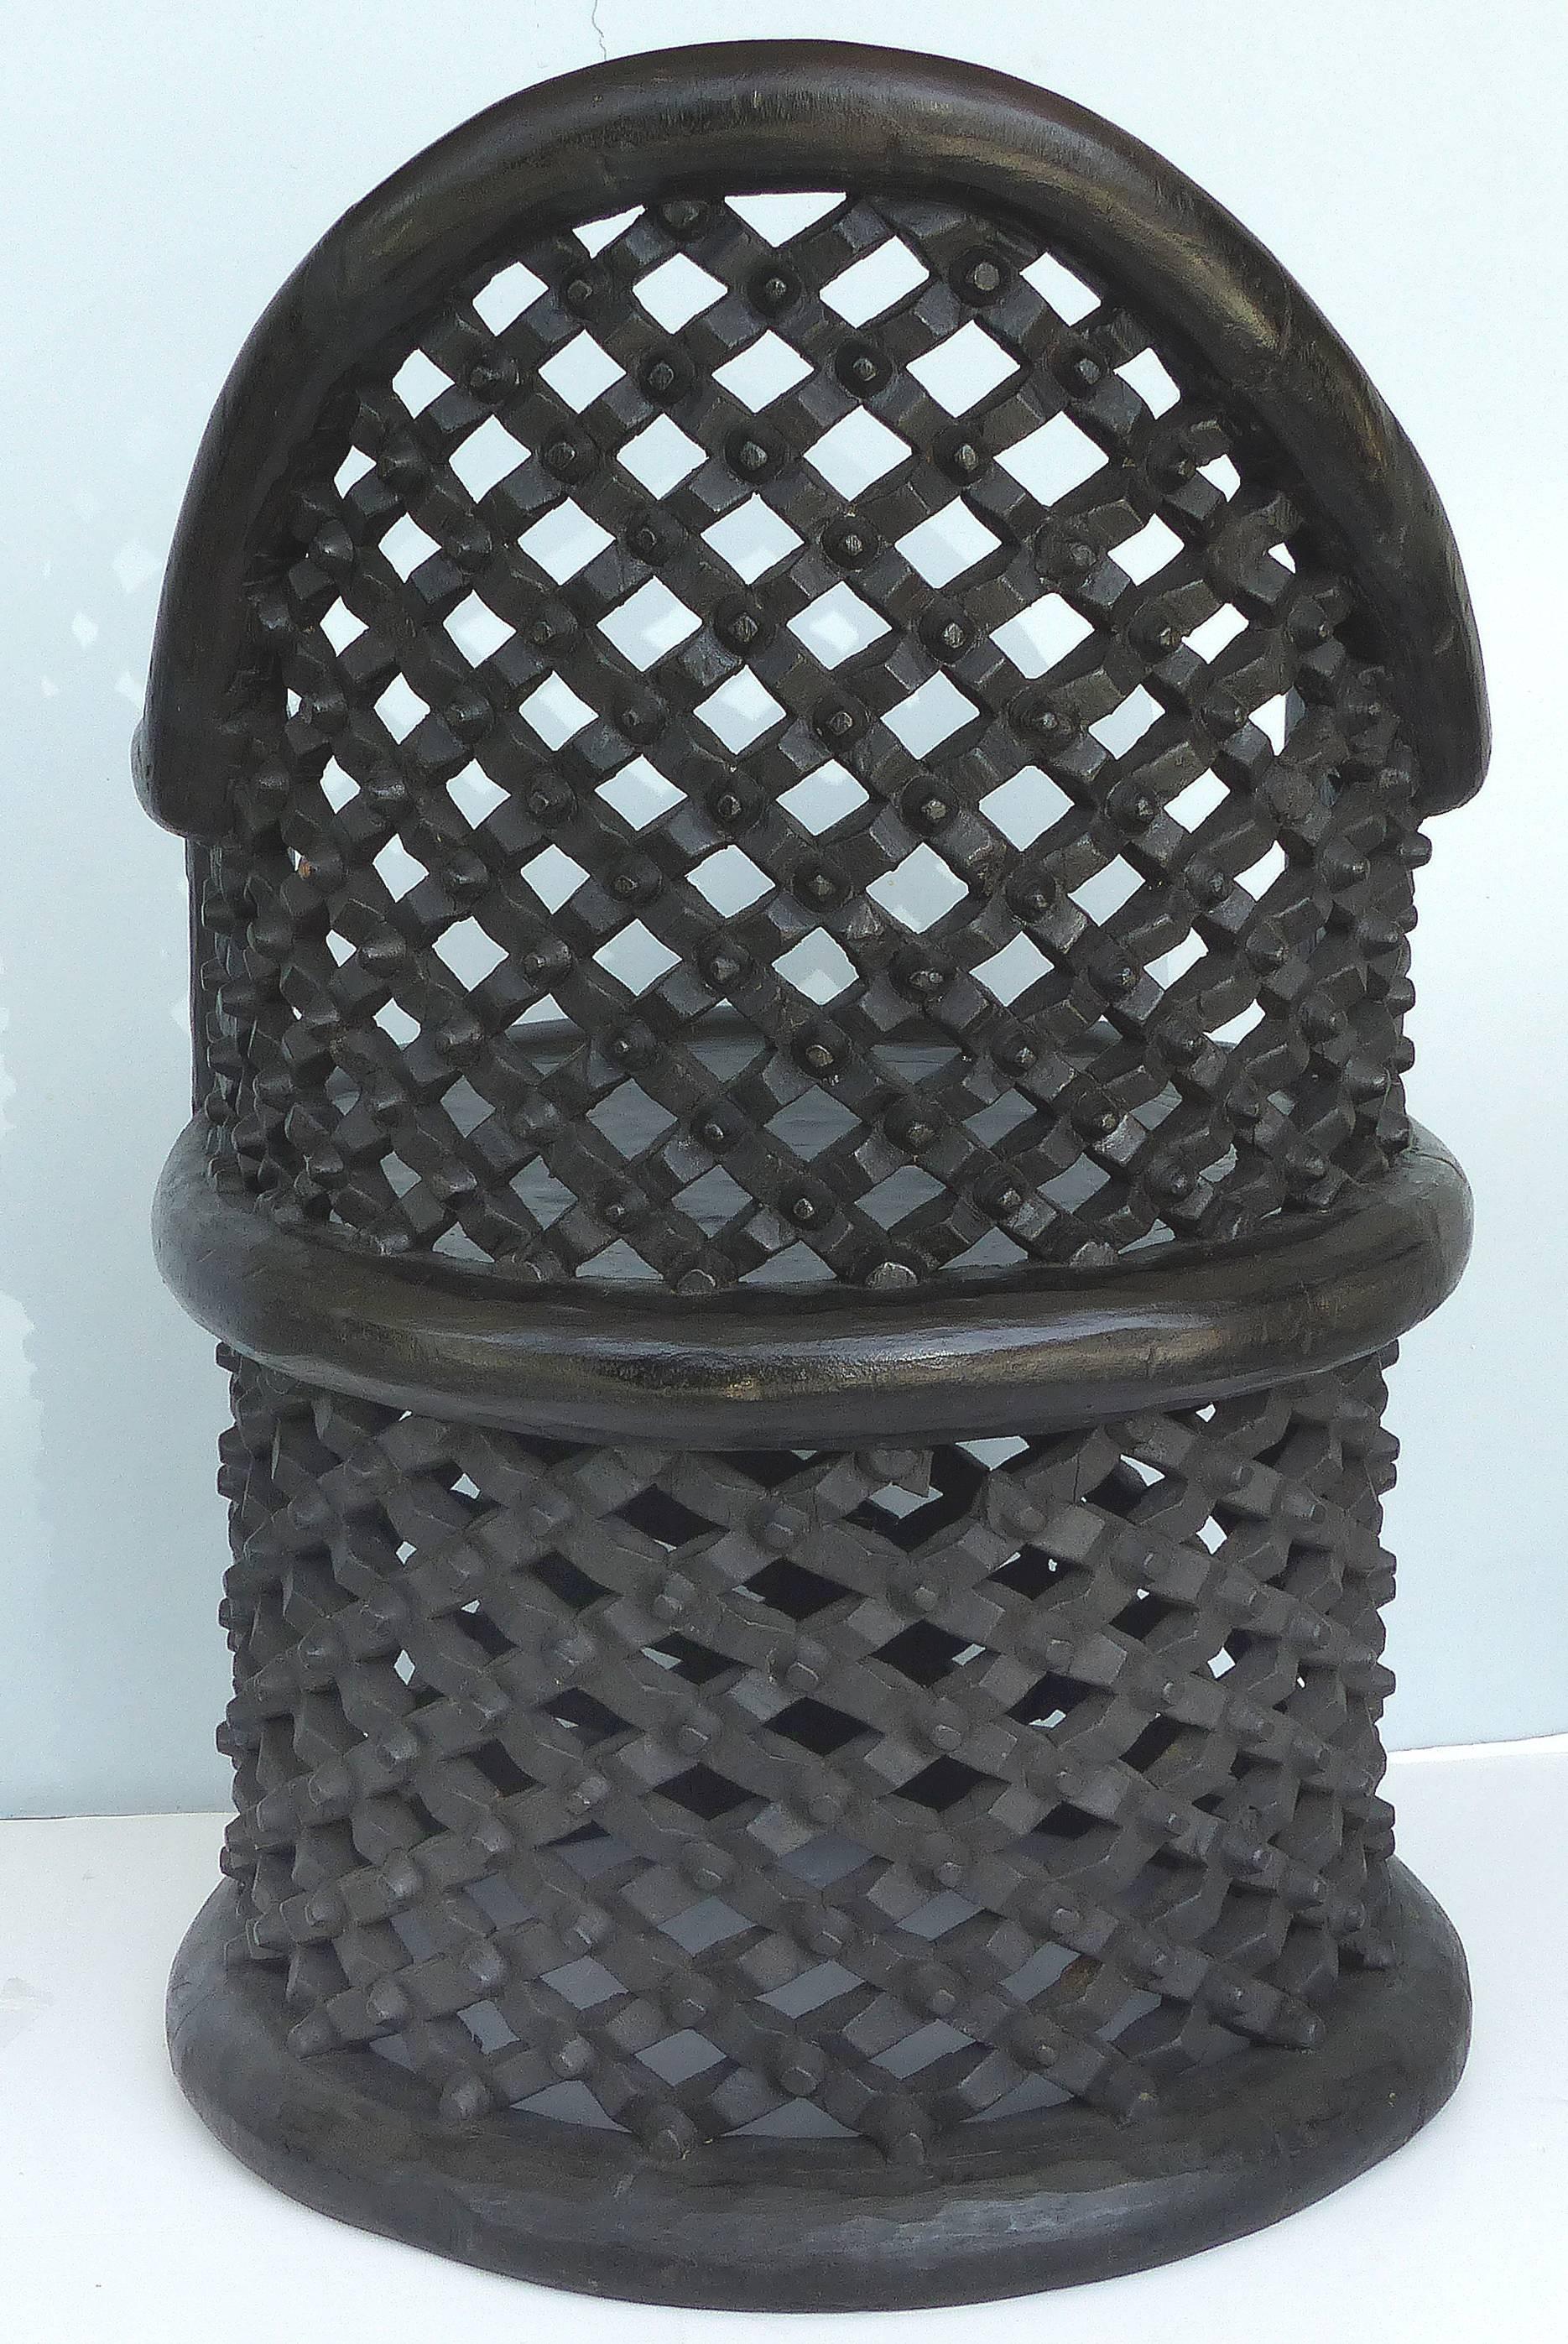 plastic chair price cameroon